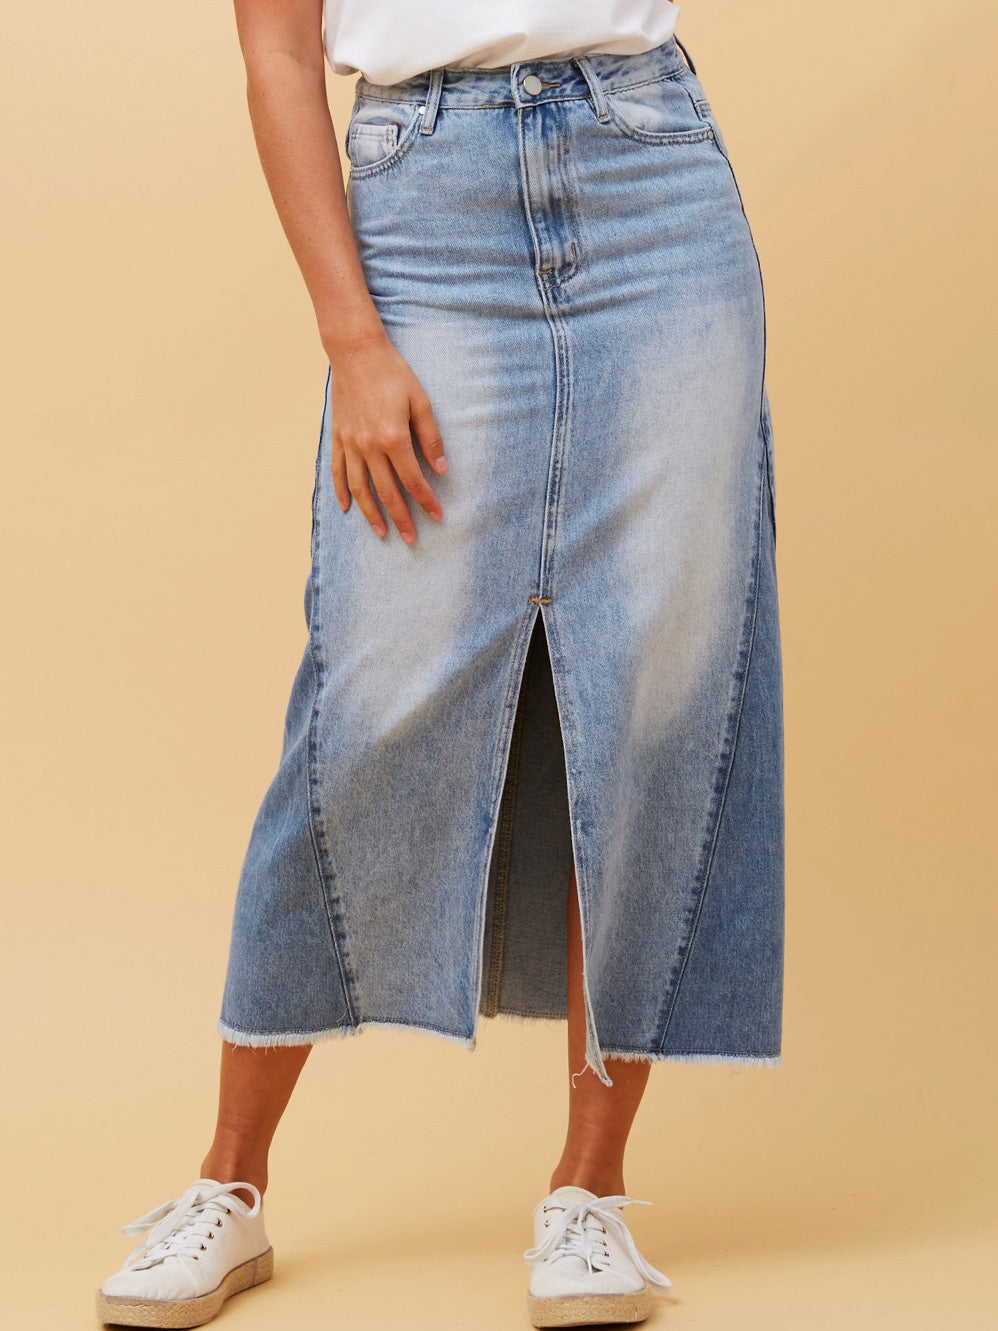 Country Road - Country Road - A-Line Denim Midi Skirt on Designer Wardrobe